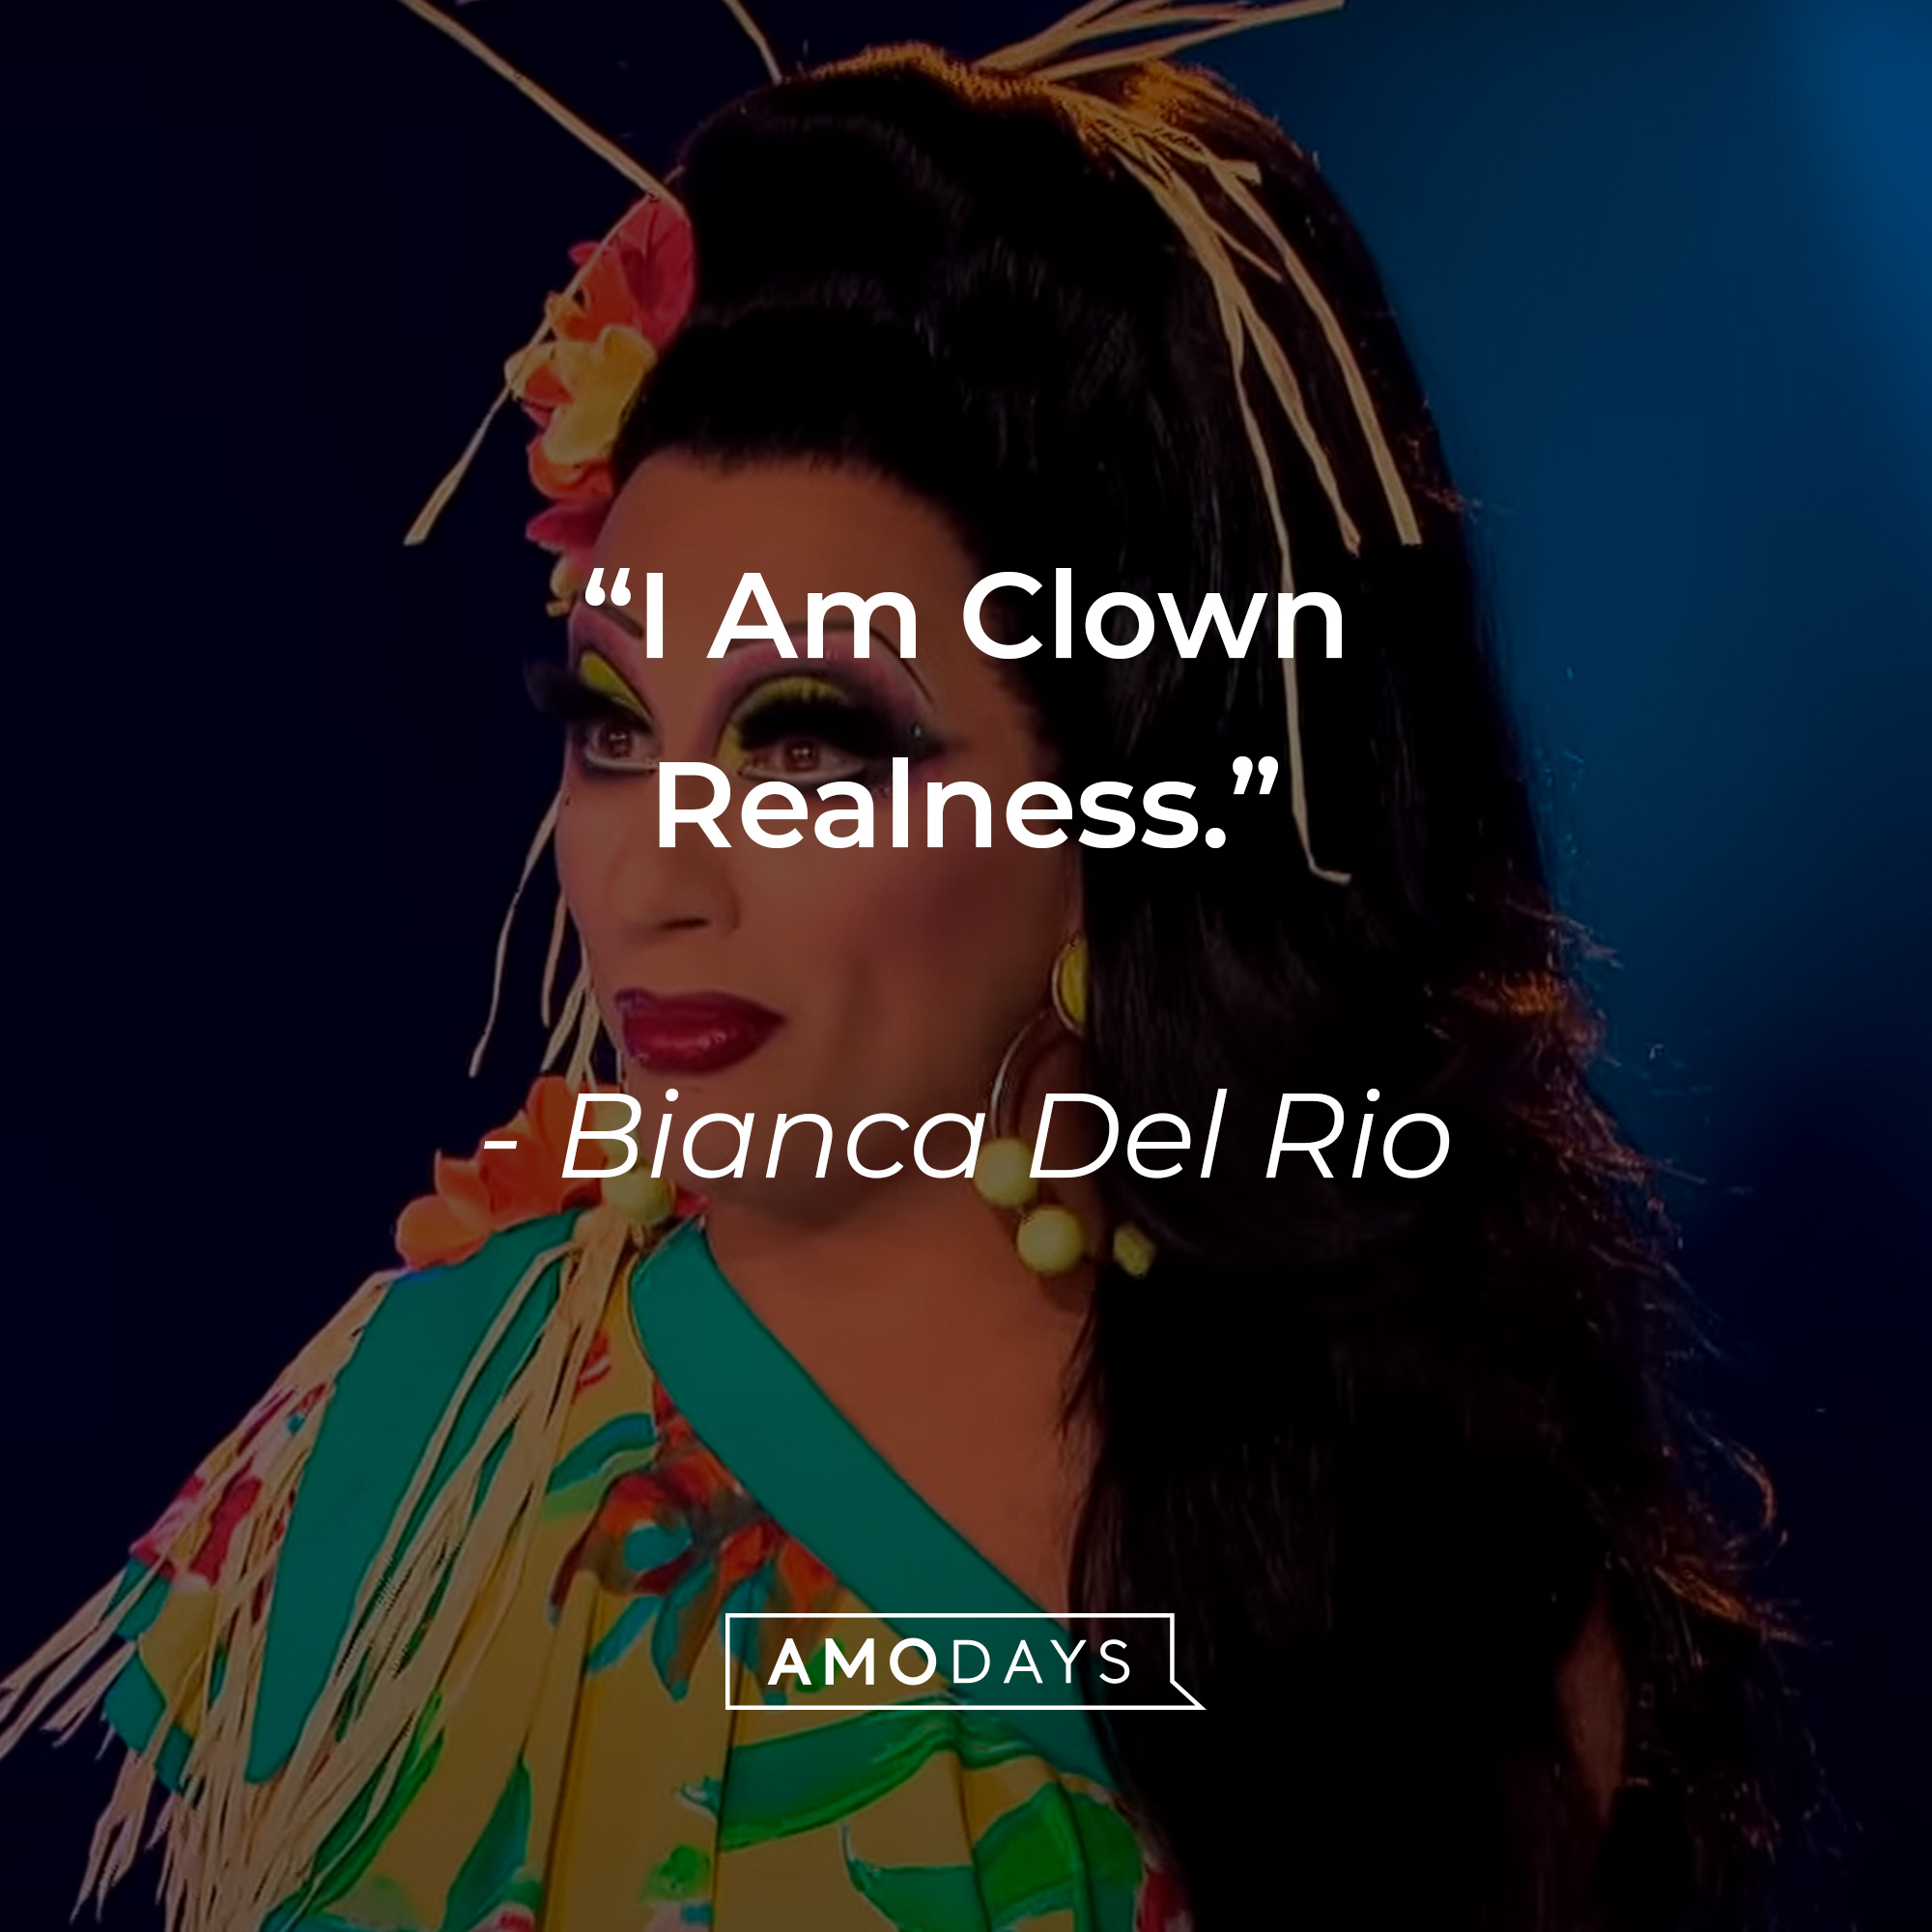 Bianca Del Rio's quote: “I Am Clown Realness.” | Source: youtube.com/rupaulsdragrace